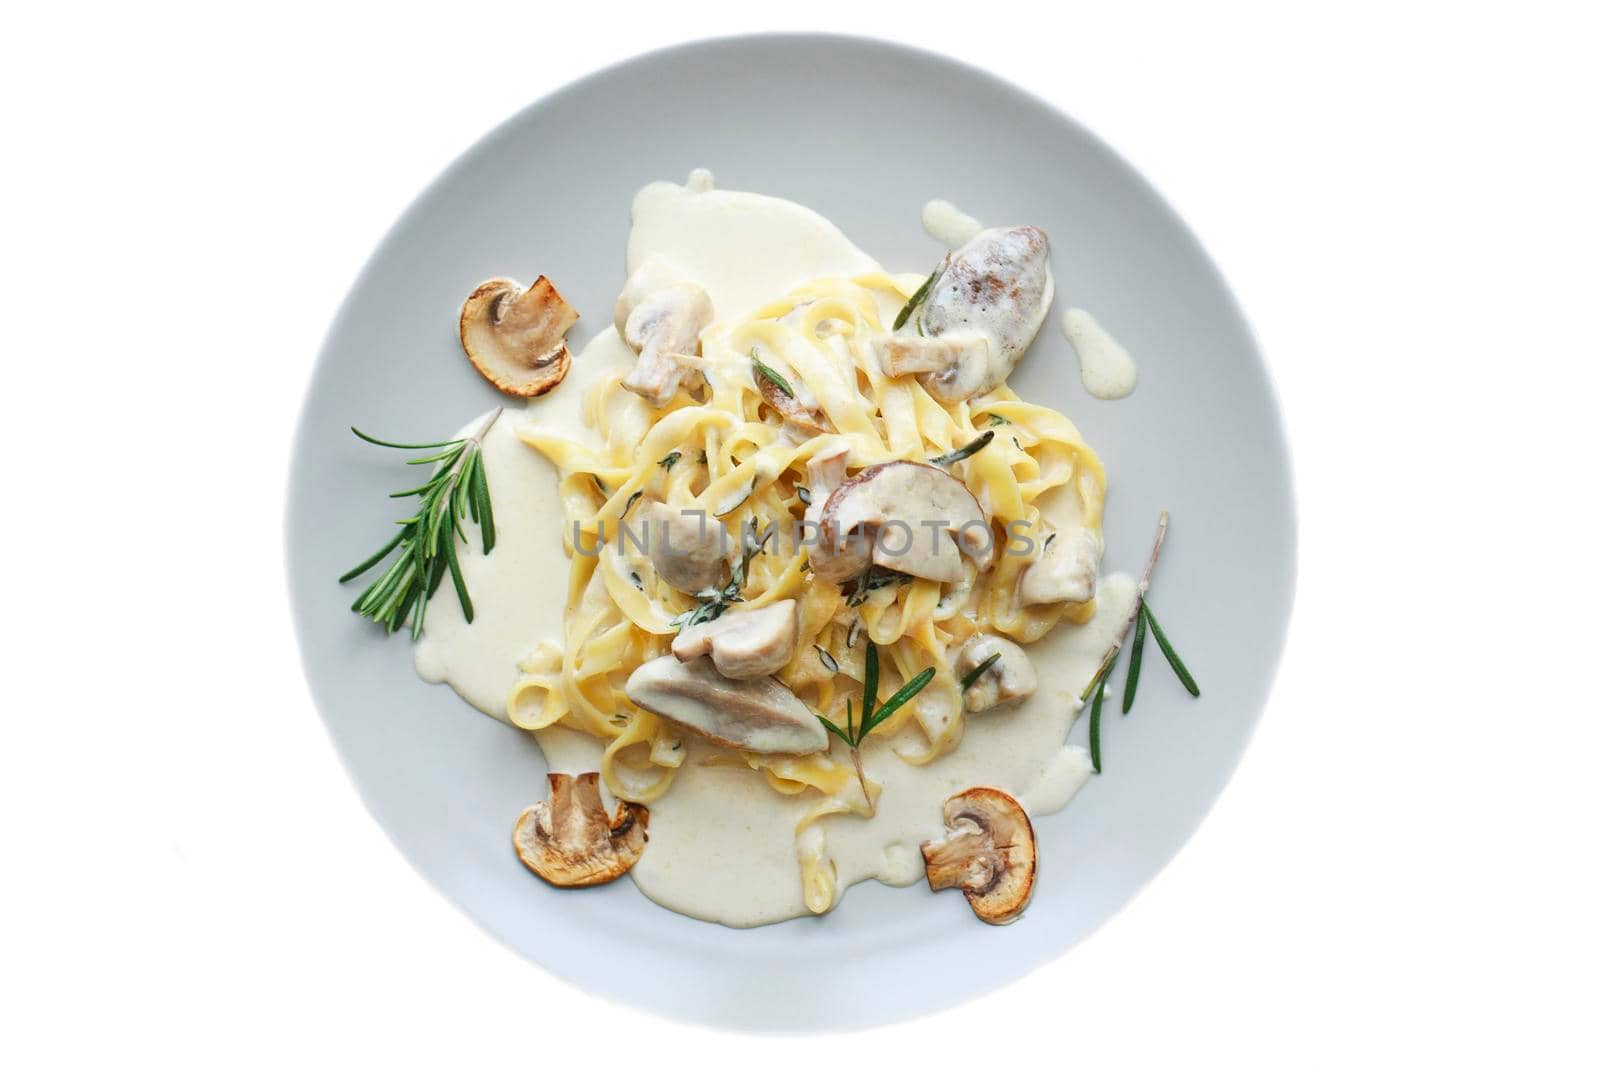 Tagliatelle vegetarian Pasta Dish with Mushrooms by Jyliana